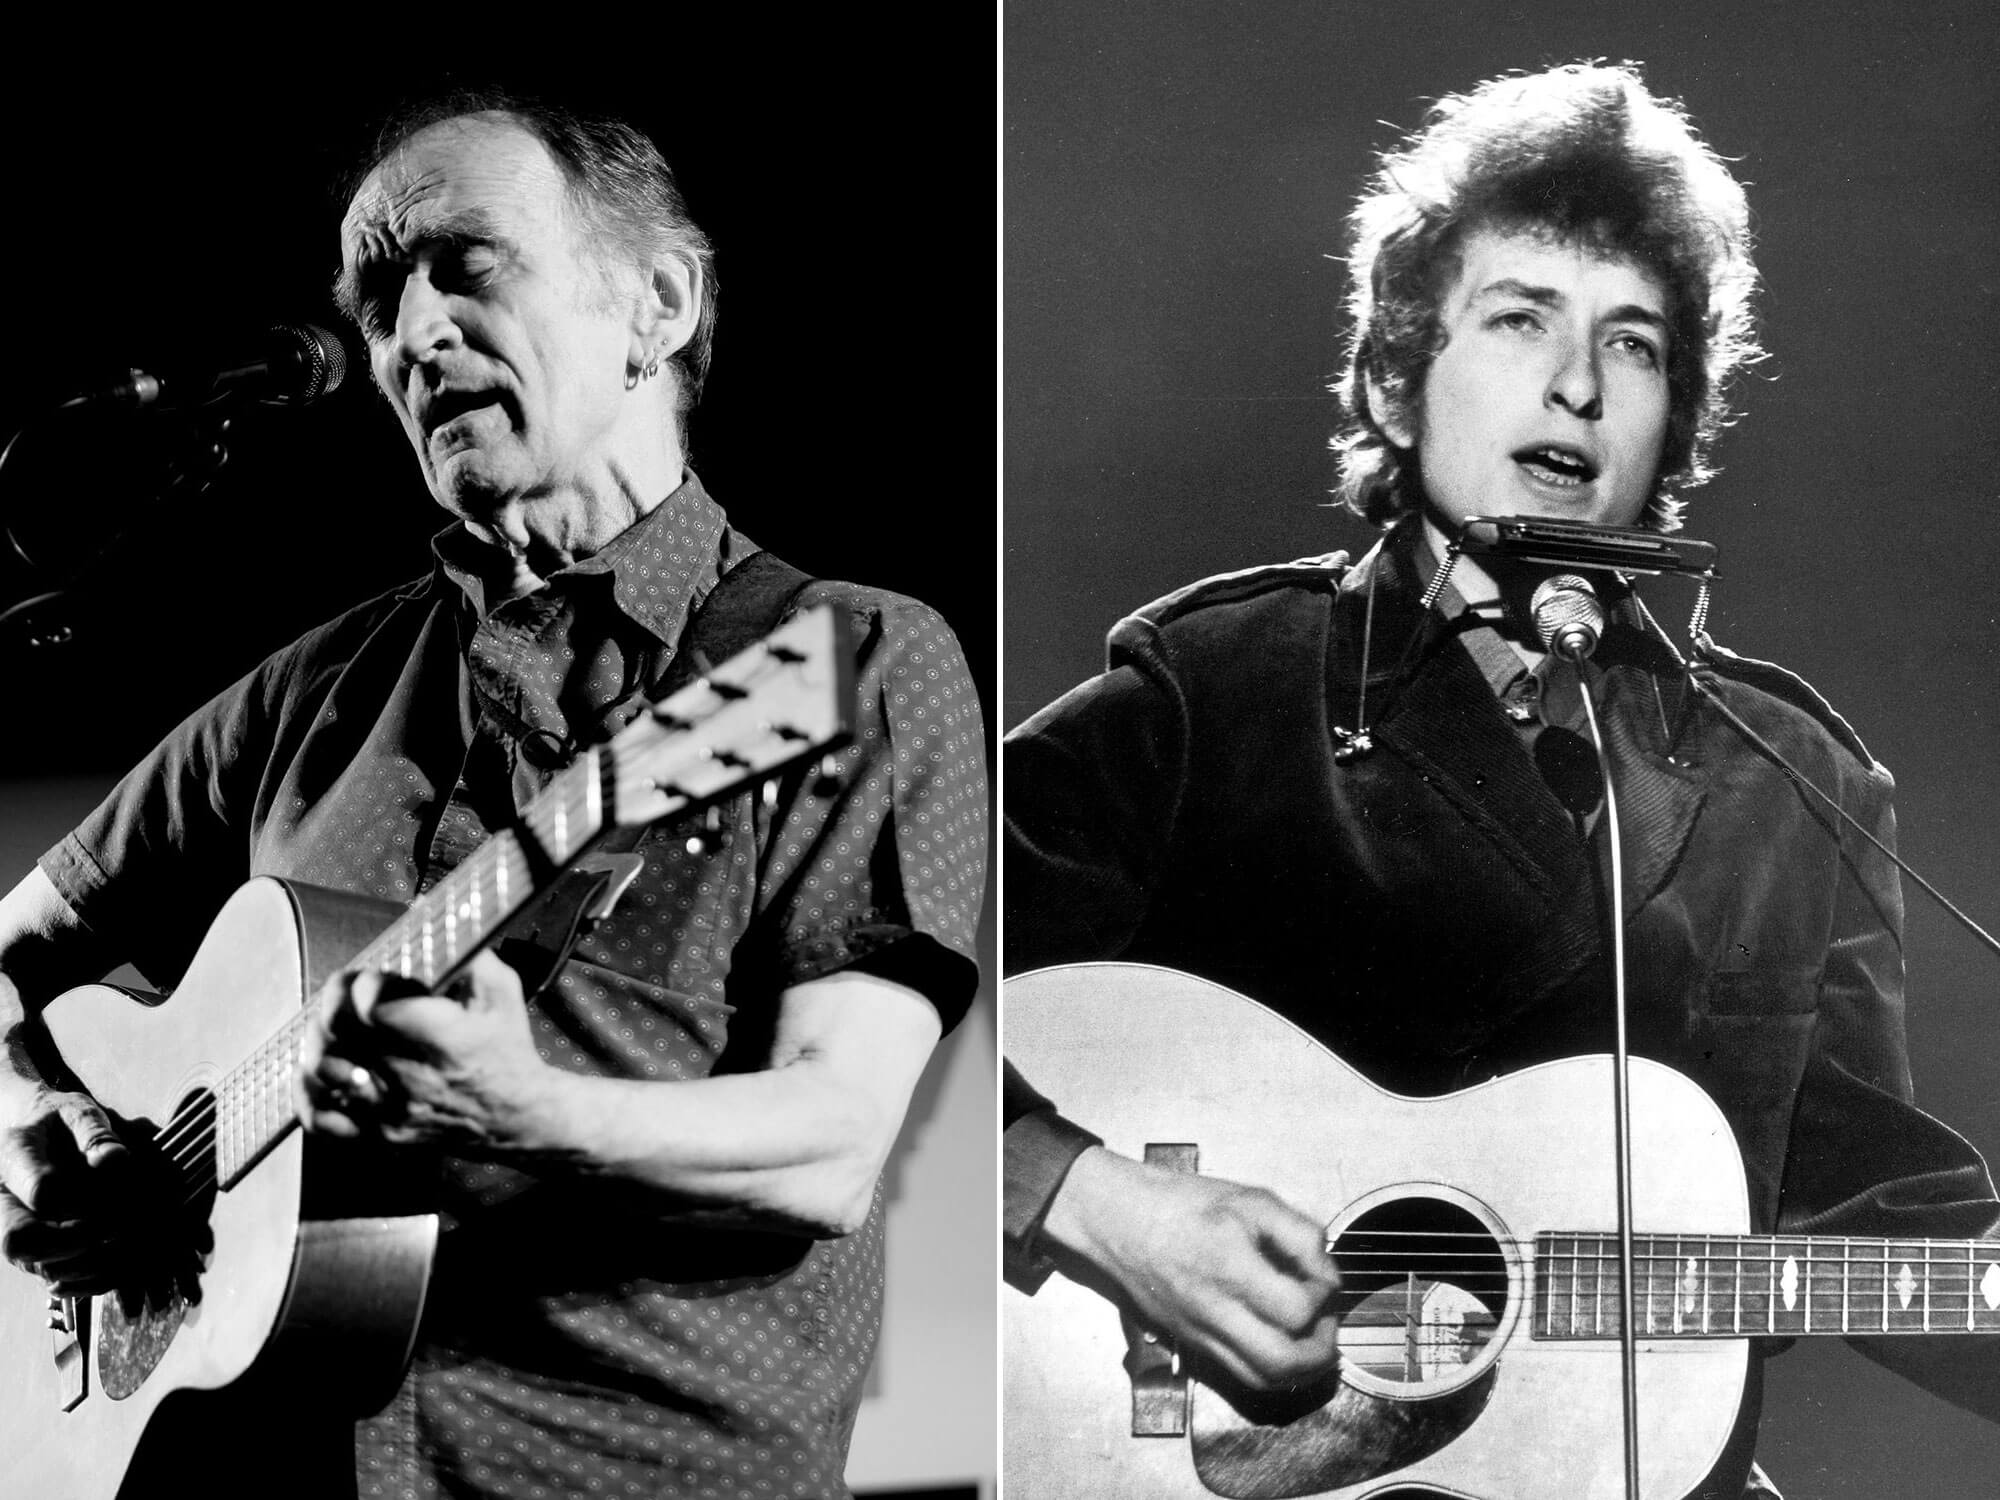 [L-R] Martin Carthy and Bob Dylan